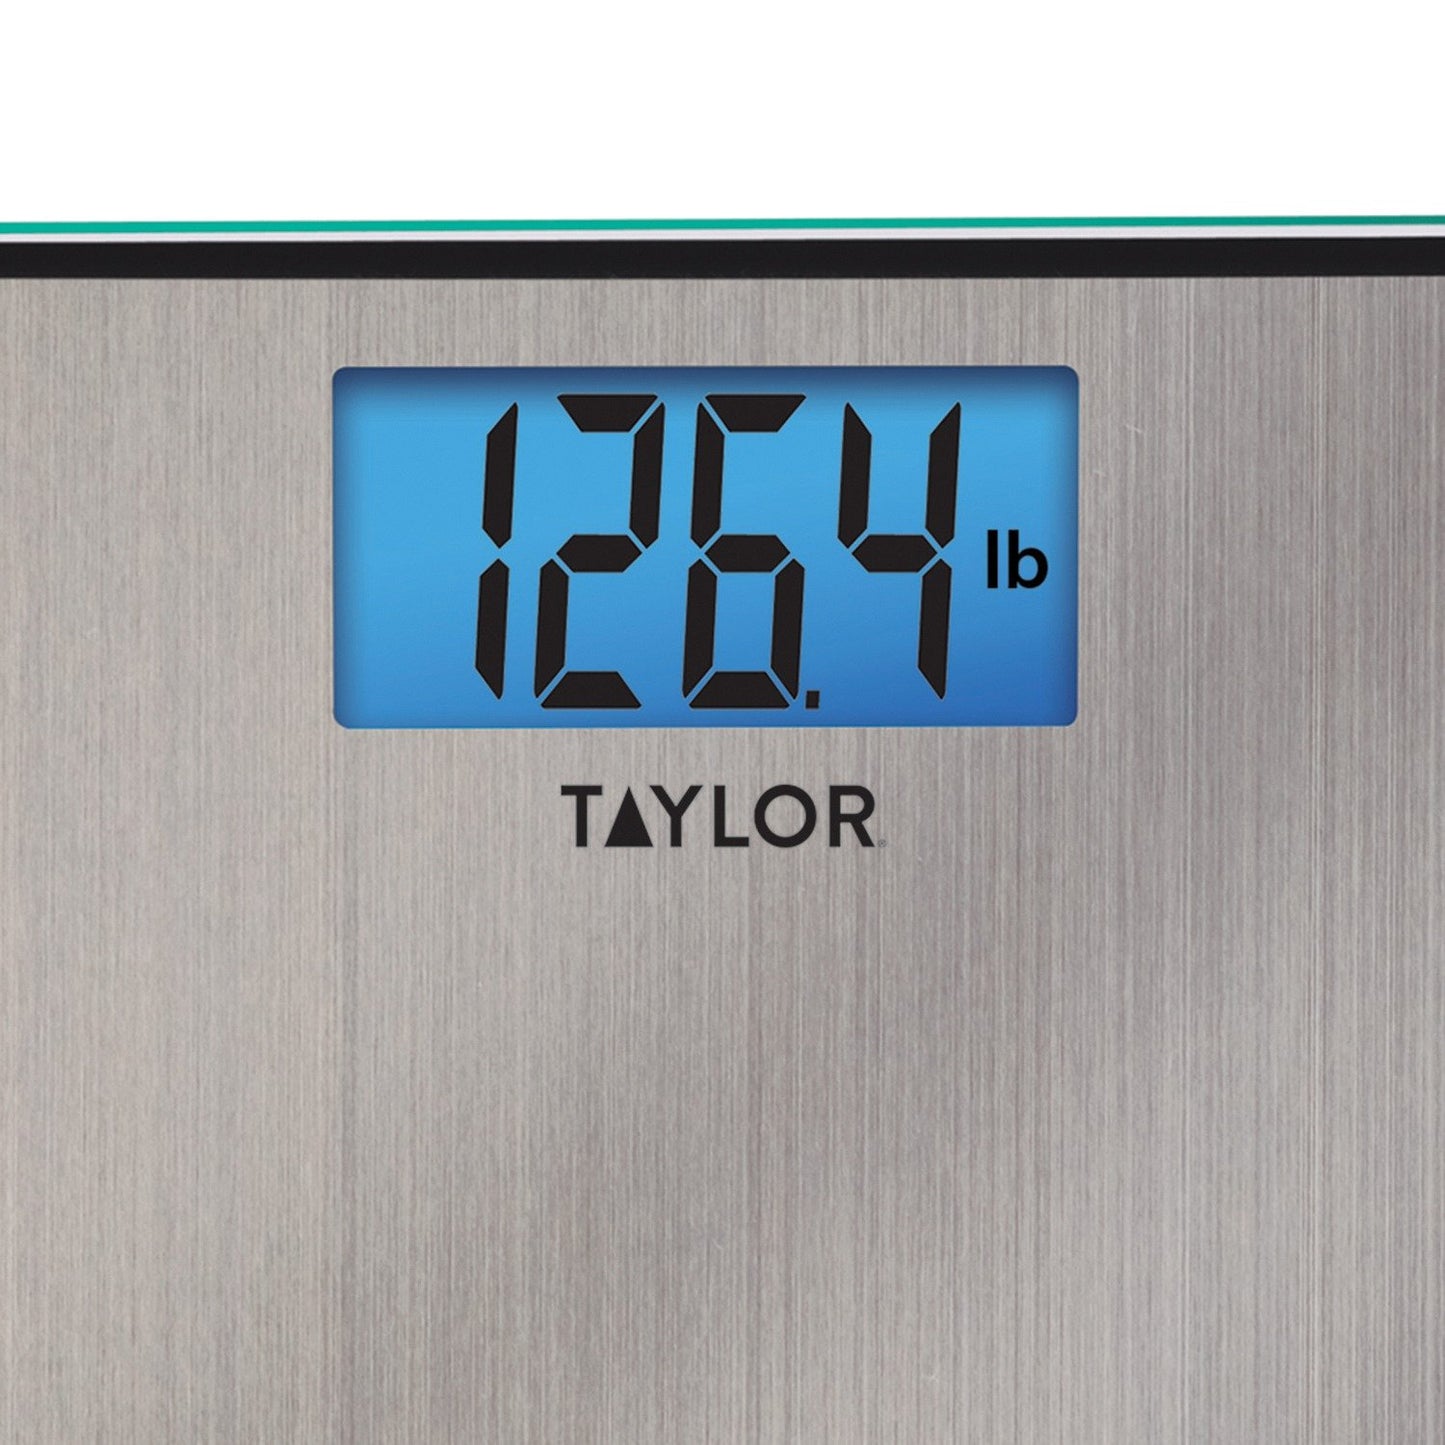 Taylor Precision Prod. 74074102 Easy-to-Read 400lb S.Steel Bathroom Scale